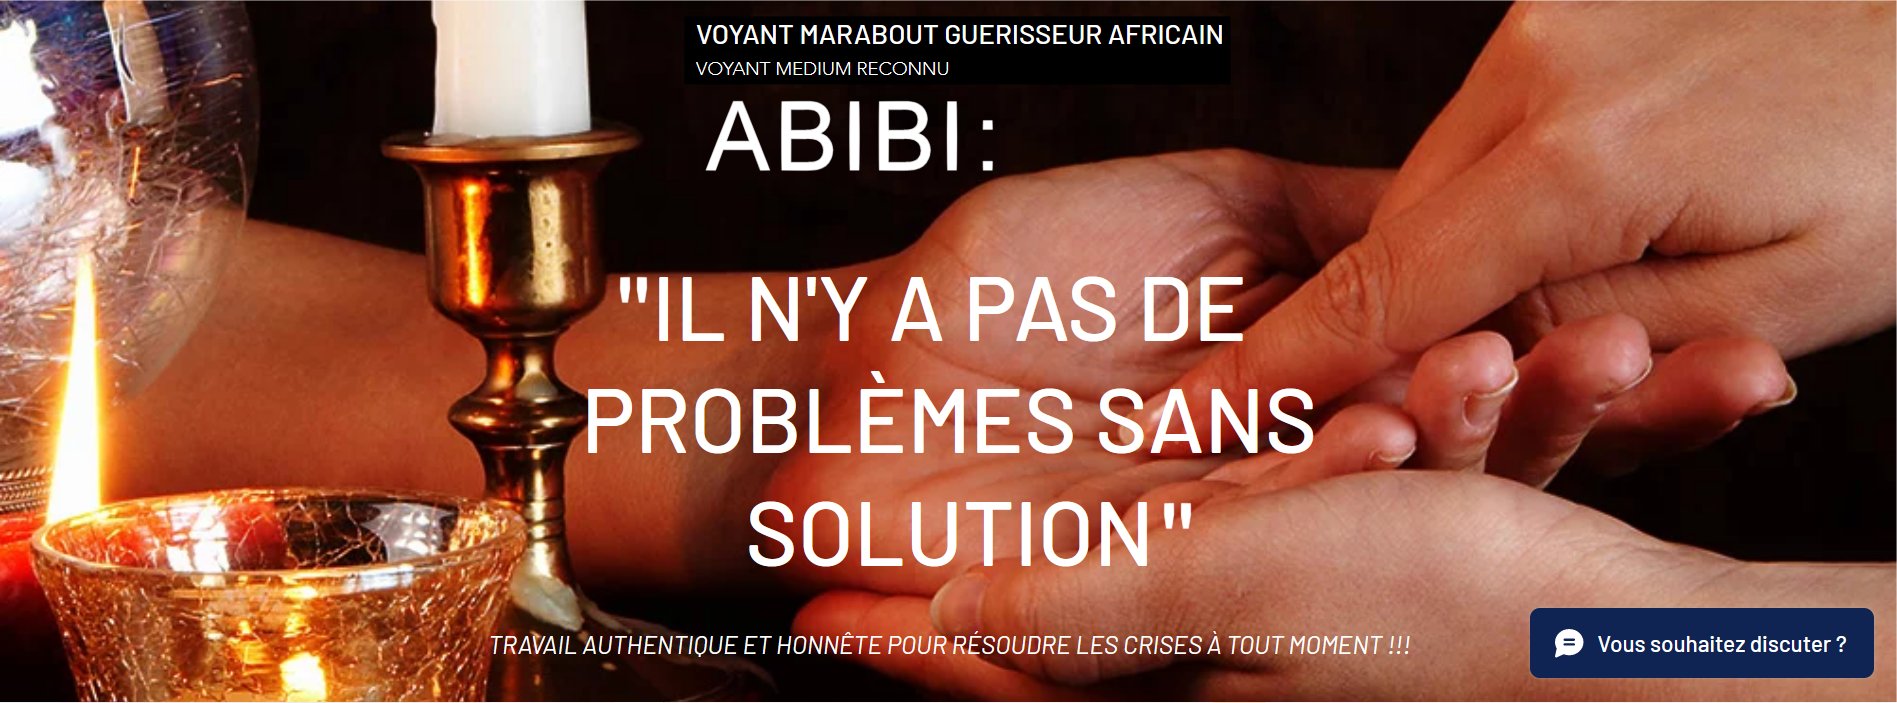 Abibi, marabout voyant medium guérisseur africain en Val-de-Marne 94